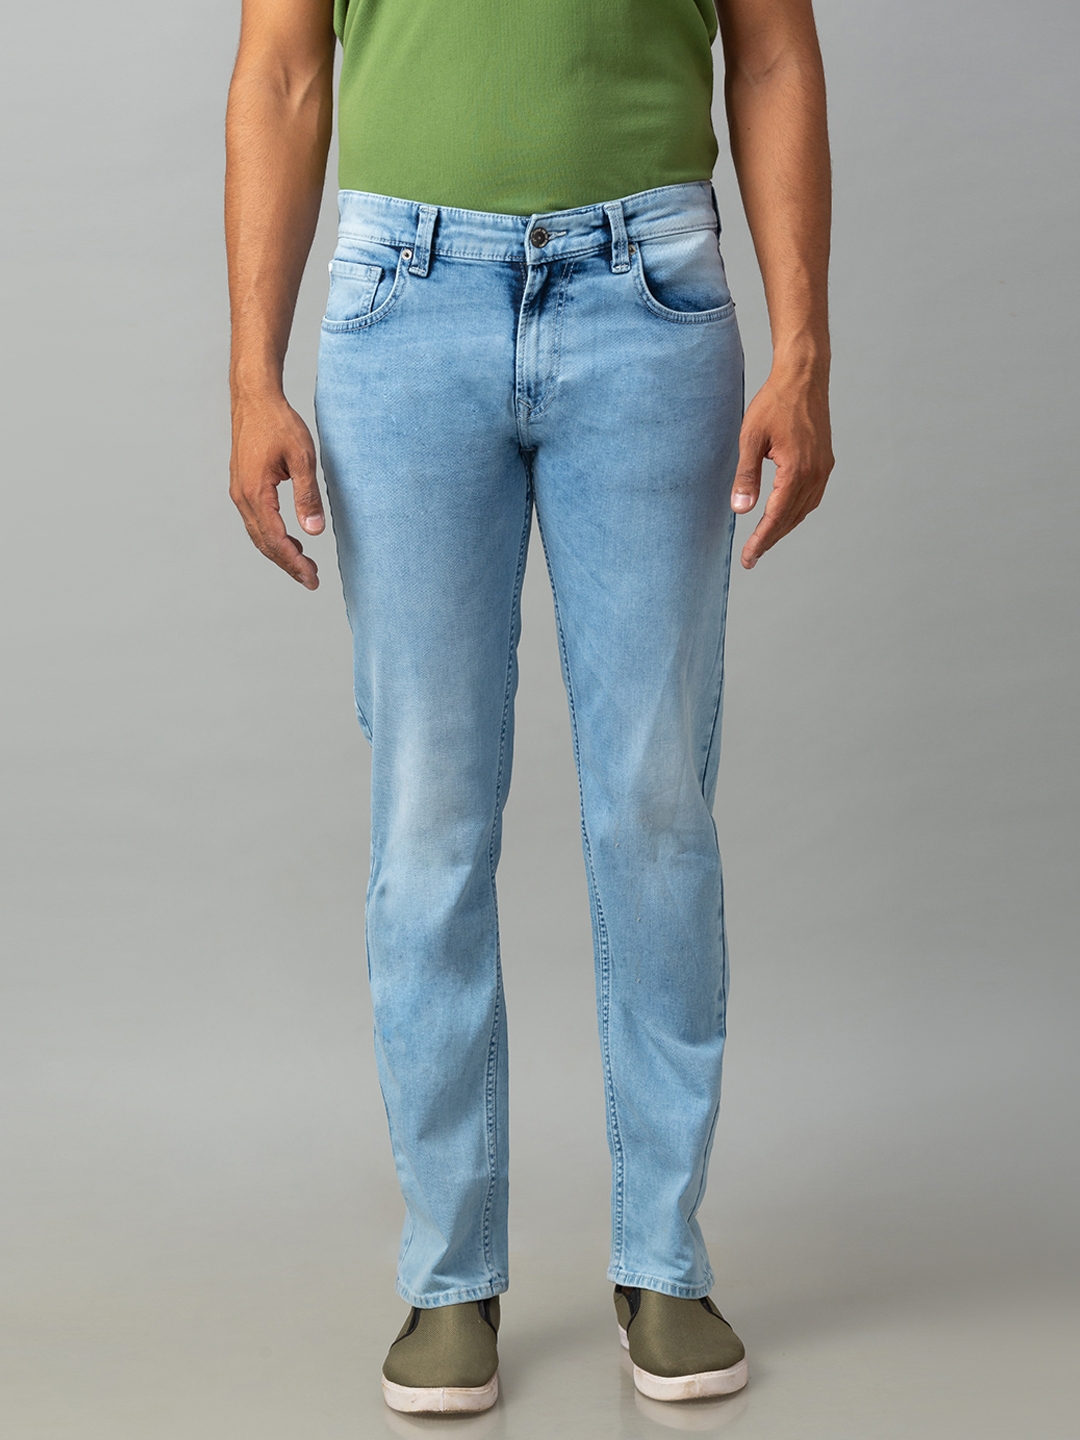 SPYKAR | Spykar Blue Cotton Low Rise Regular Fit Jeans (Rover)